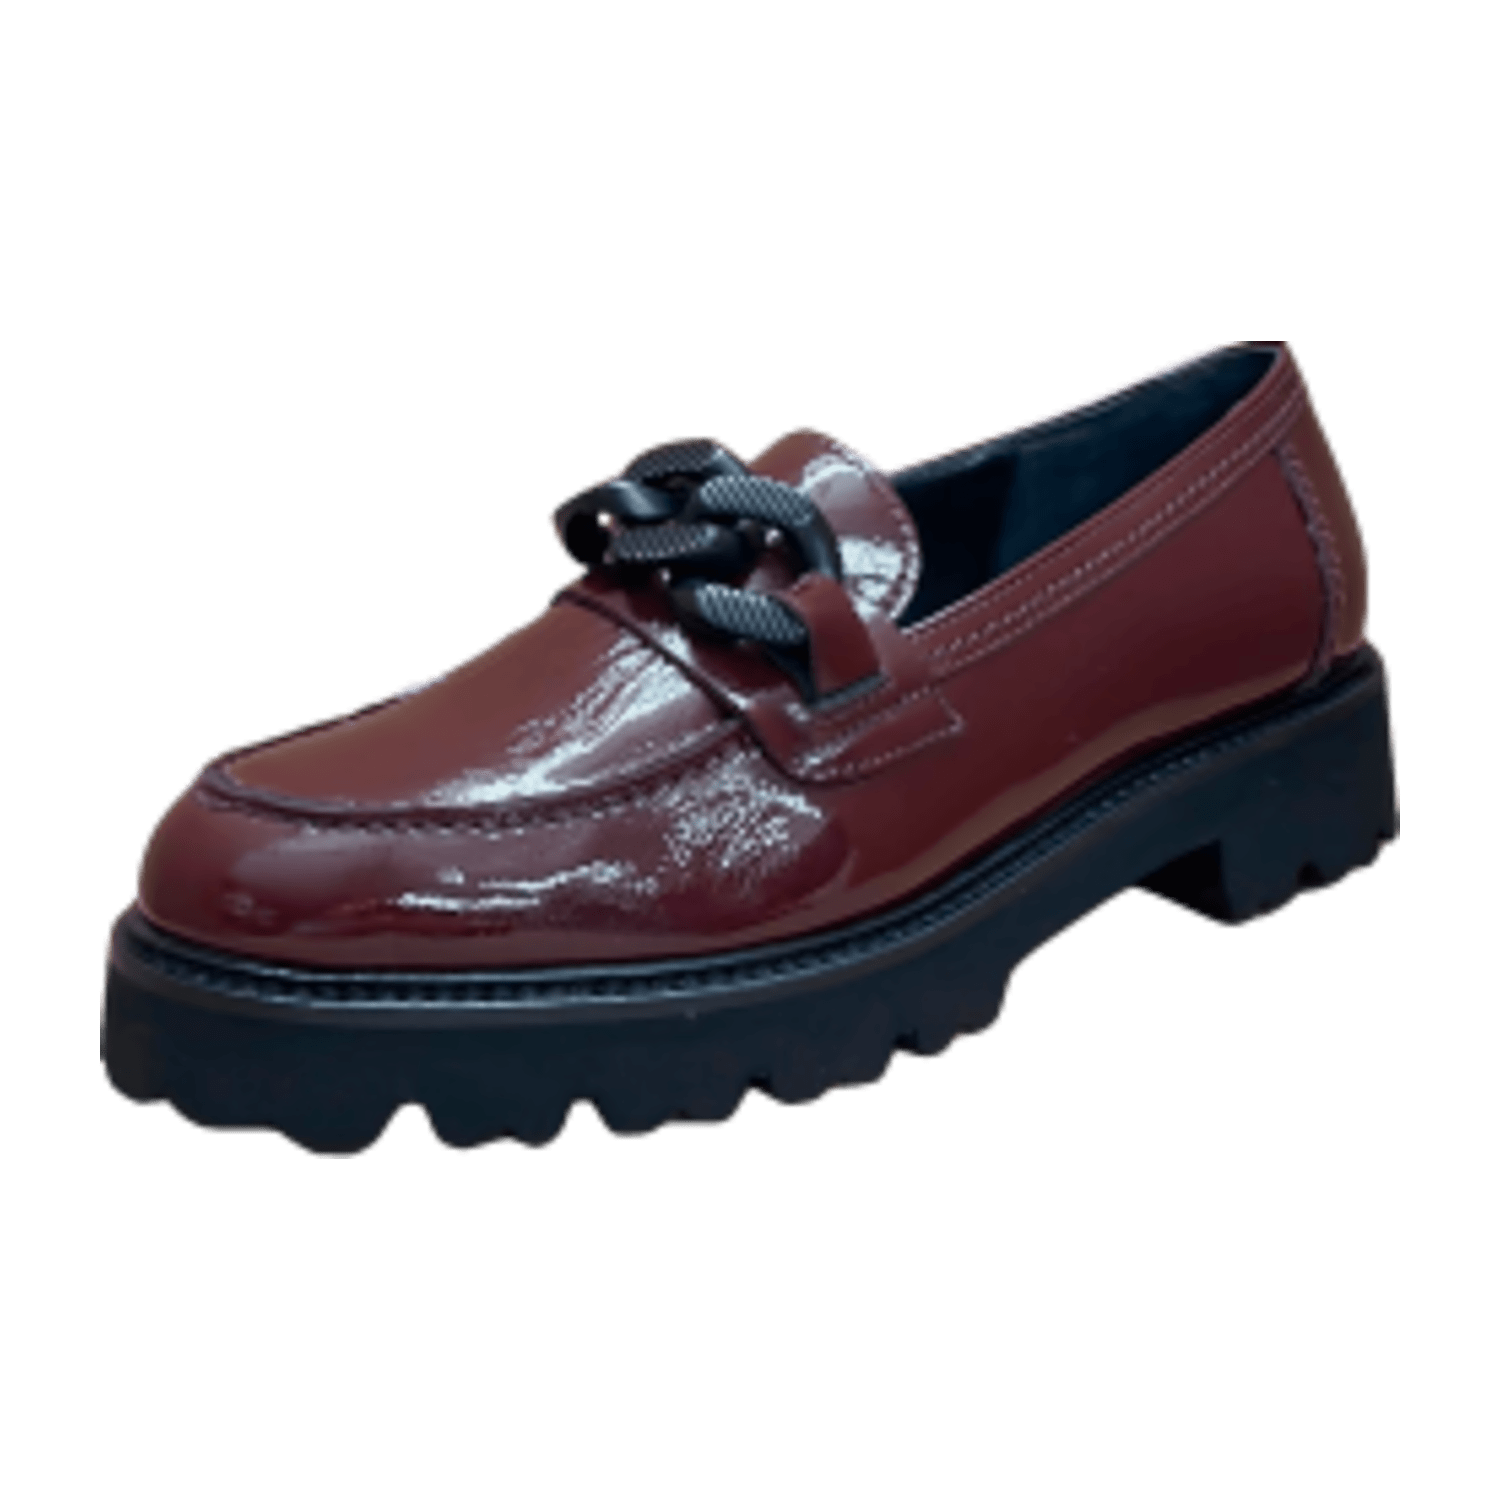 Gabor Fashion Schuhe Slipper dunkelrot Lack 35.240.95